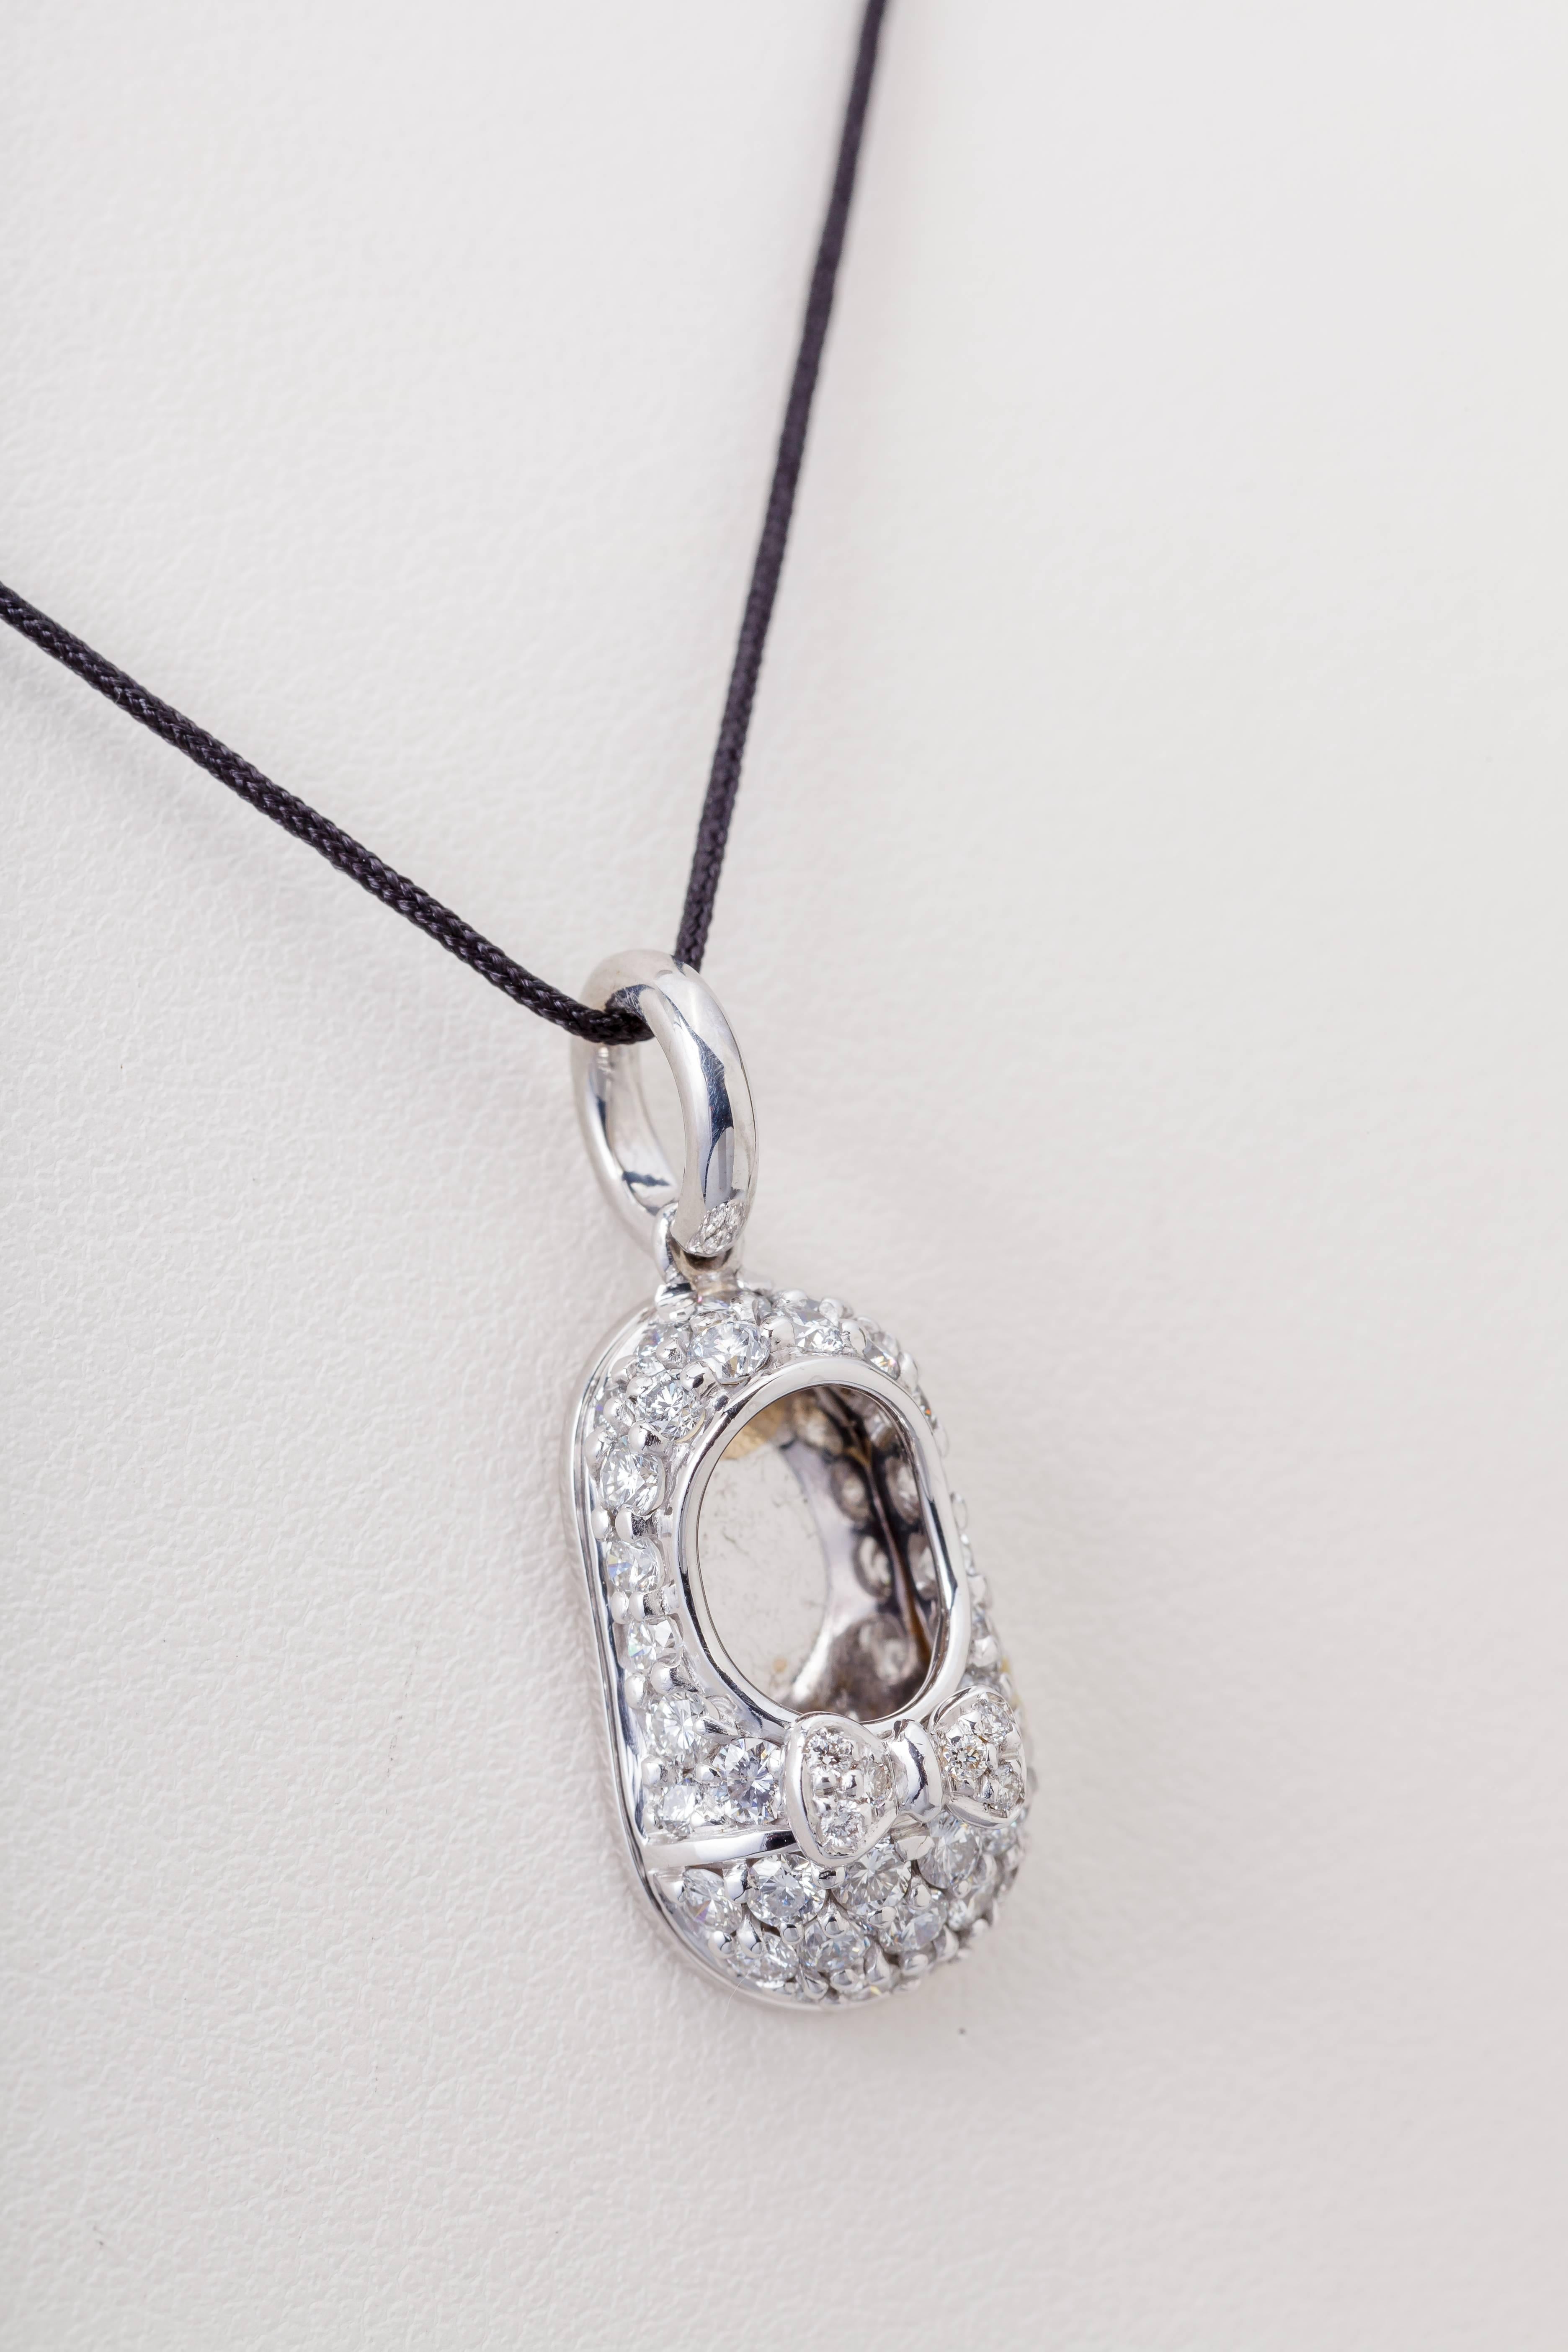 This 18k white gold Aaron Basha shoe dangle charm features pavé set diamonds totaling 2.0ct.